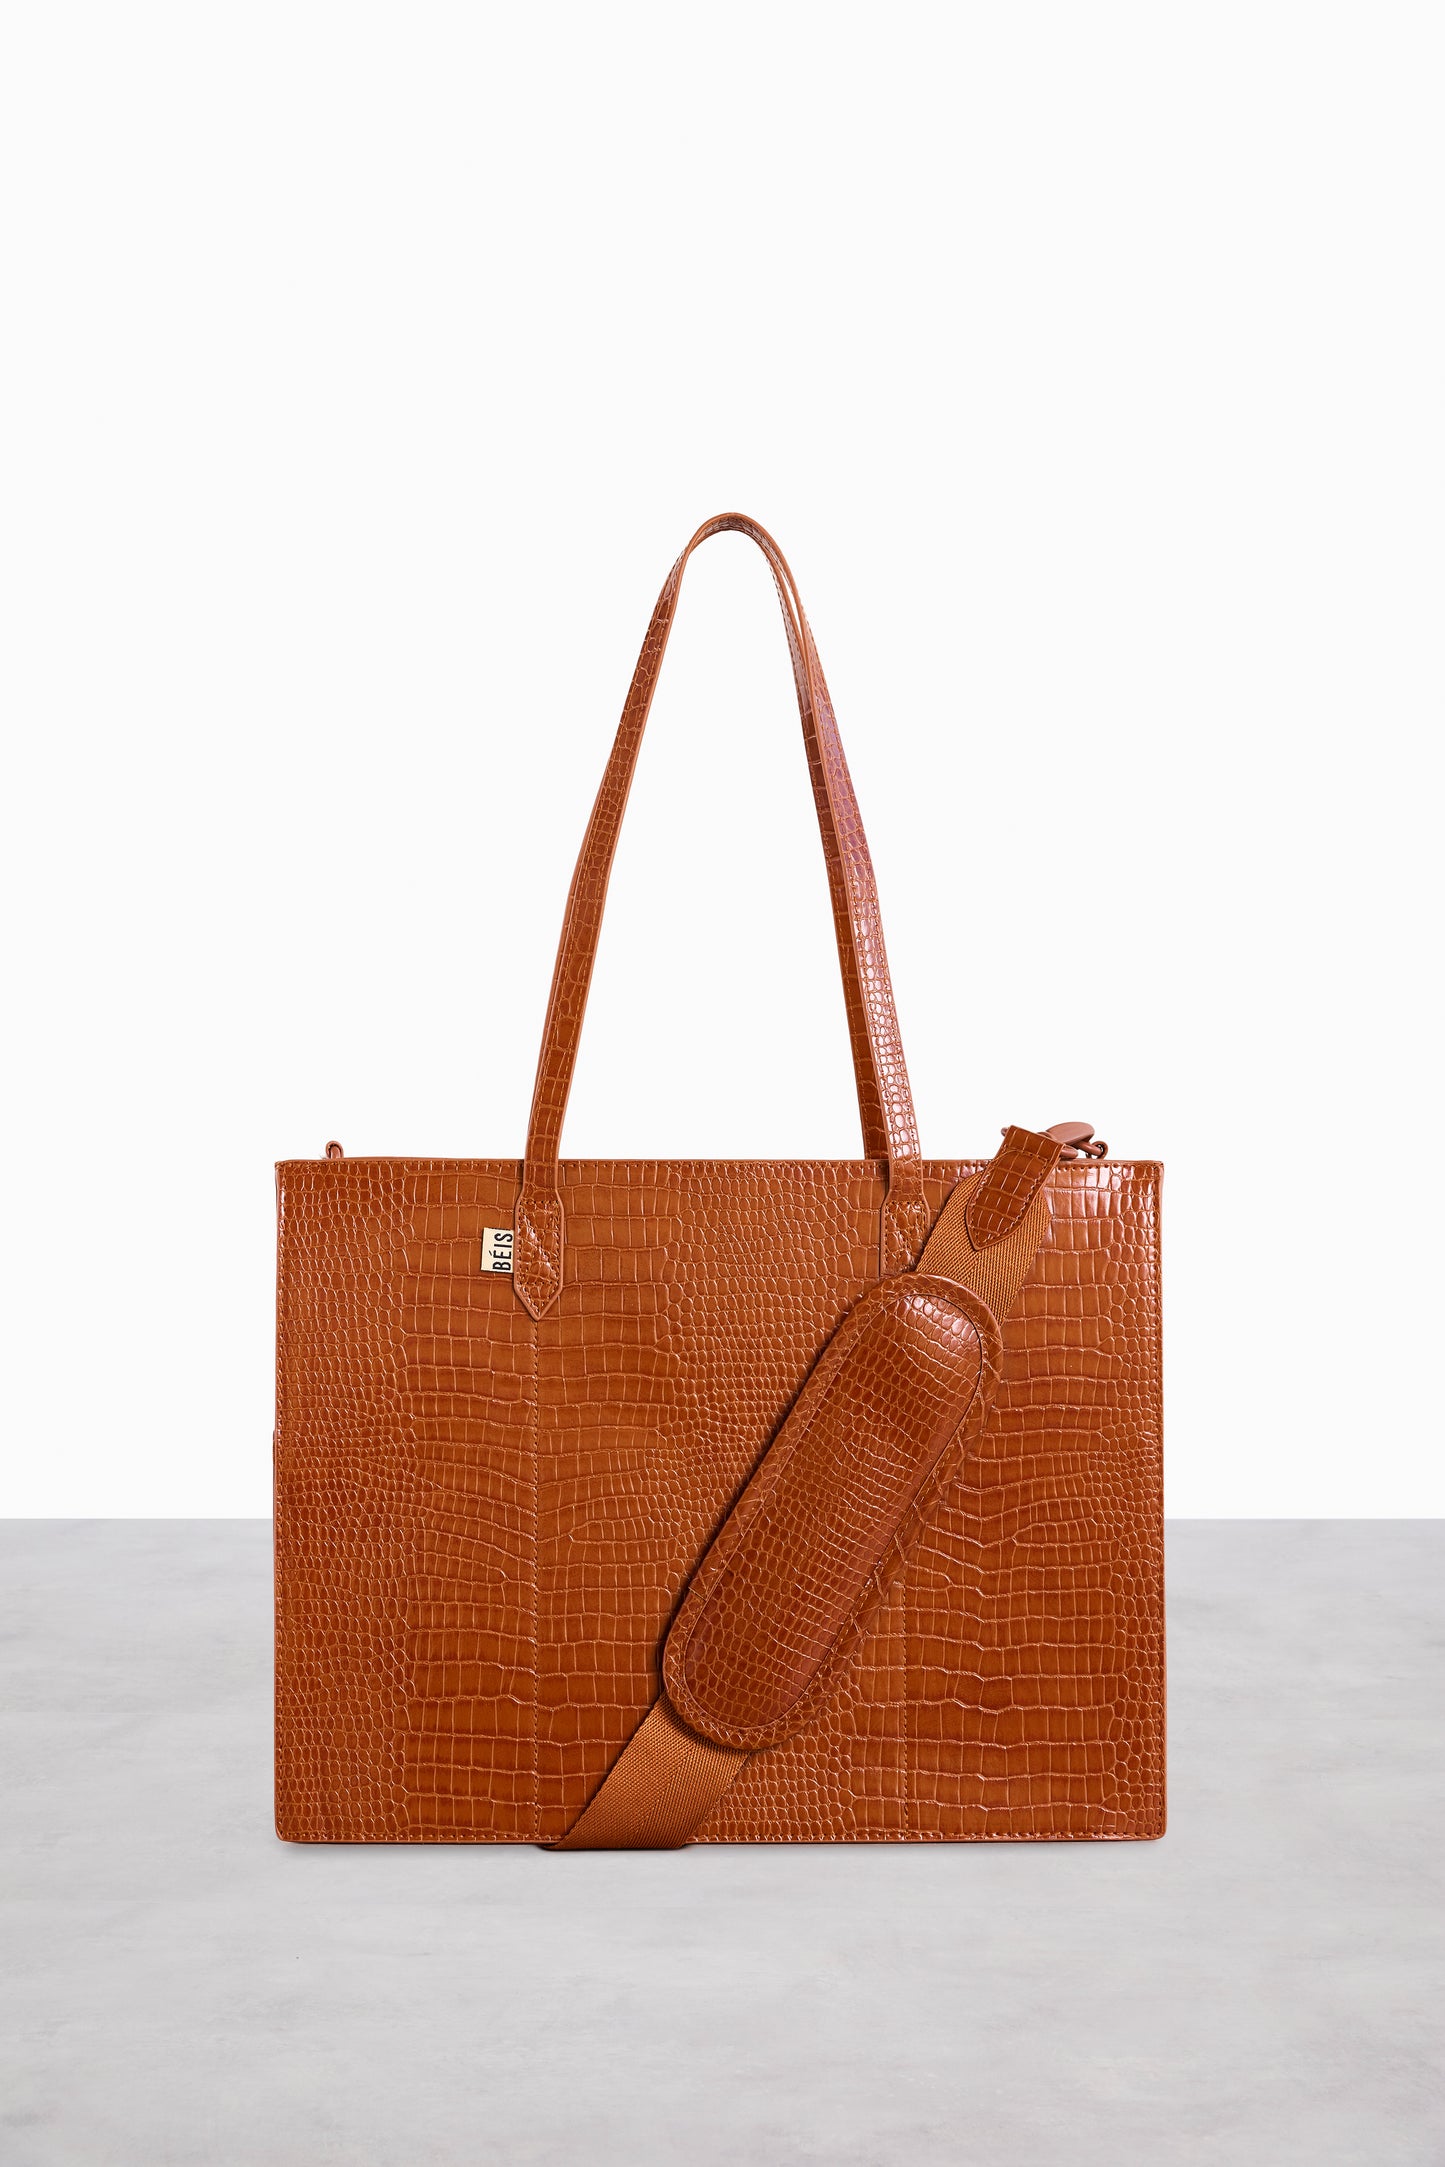 BÉIS 'The Work Tote' in Cognac Croc - Brown Work Tote & Laptop Bag For Women